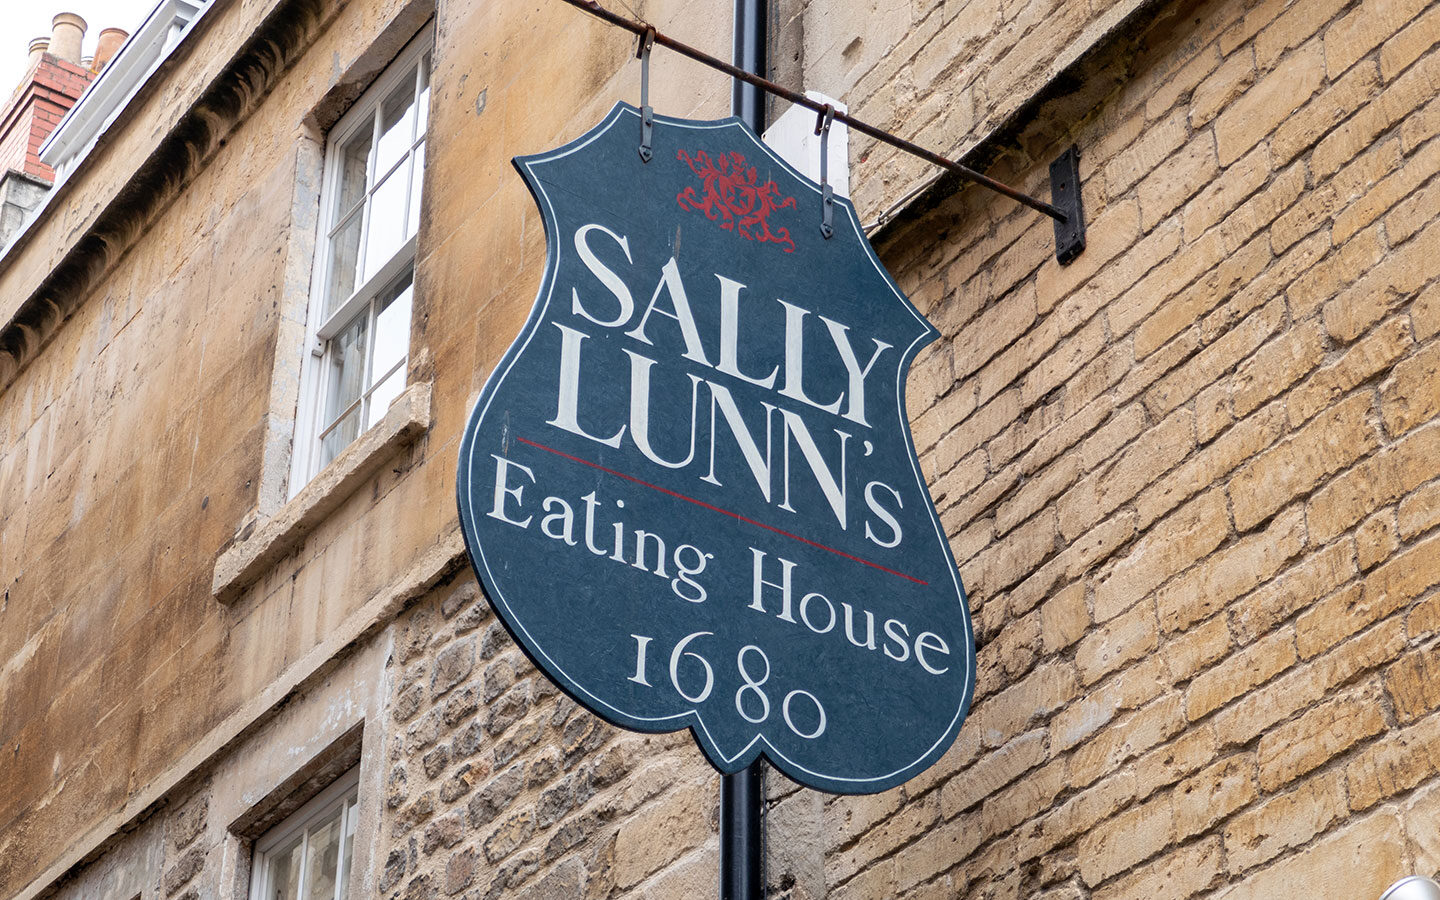 Sally Lunn's Eating House, home to the Sally Lunn bun